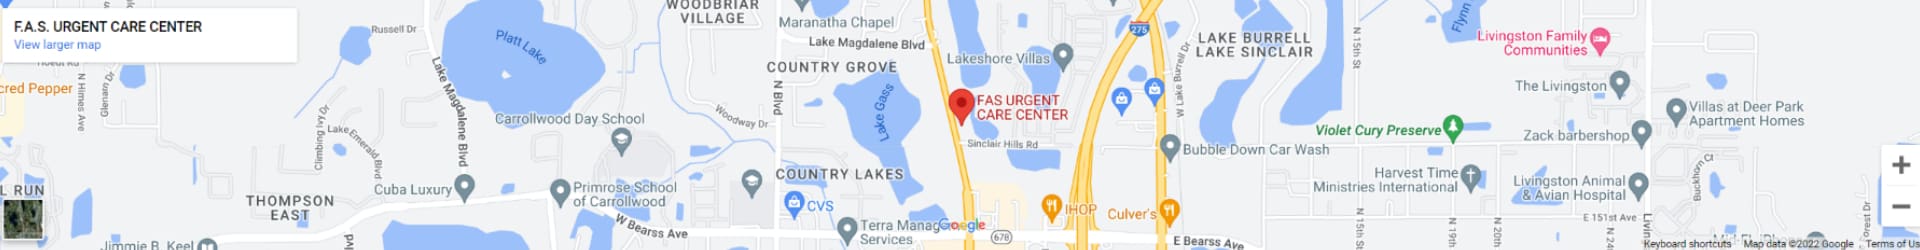 F.A.S. Urgent Care Center